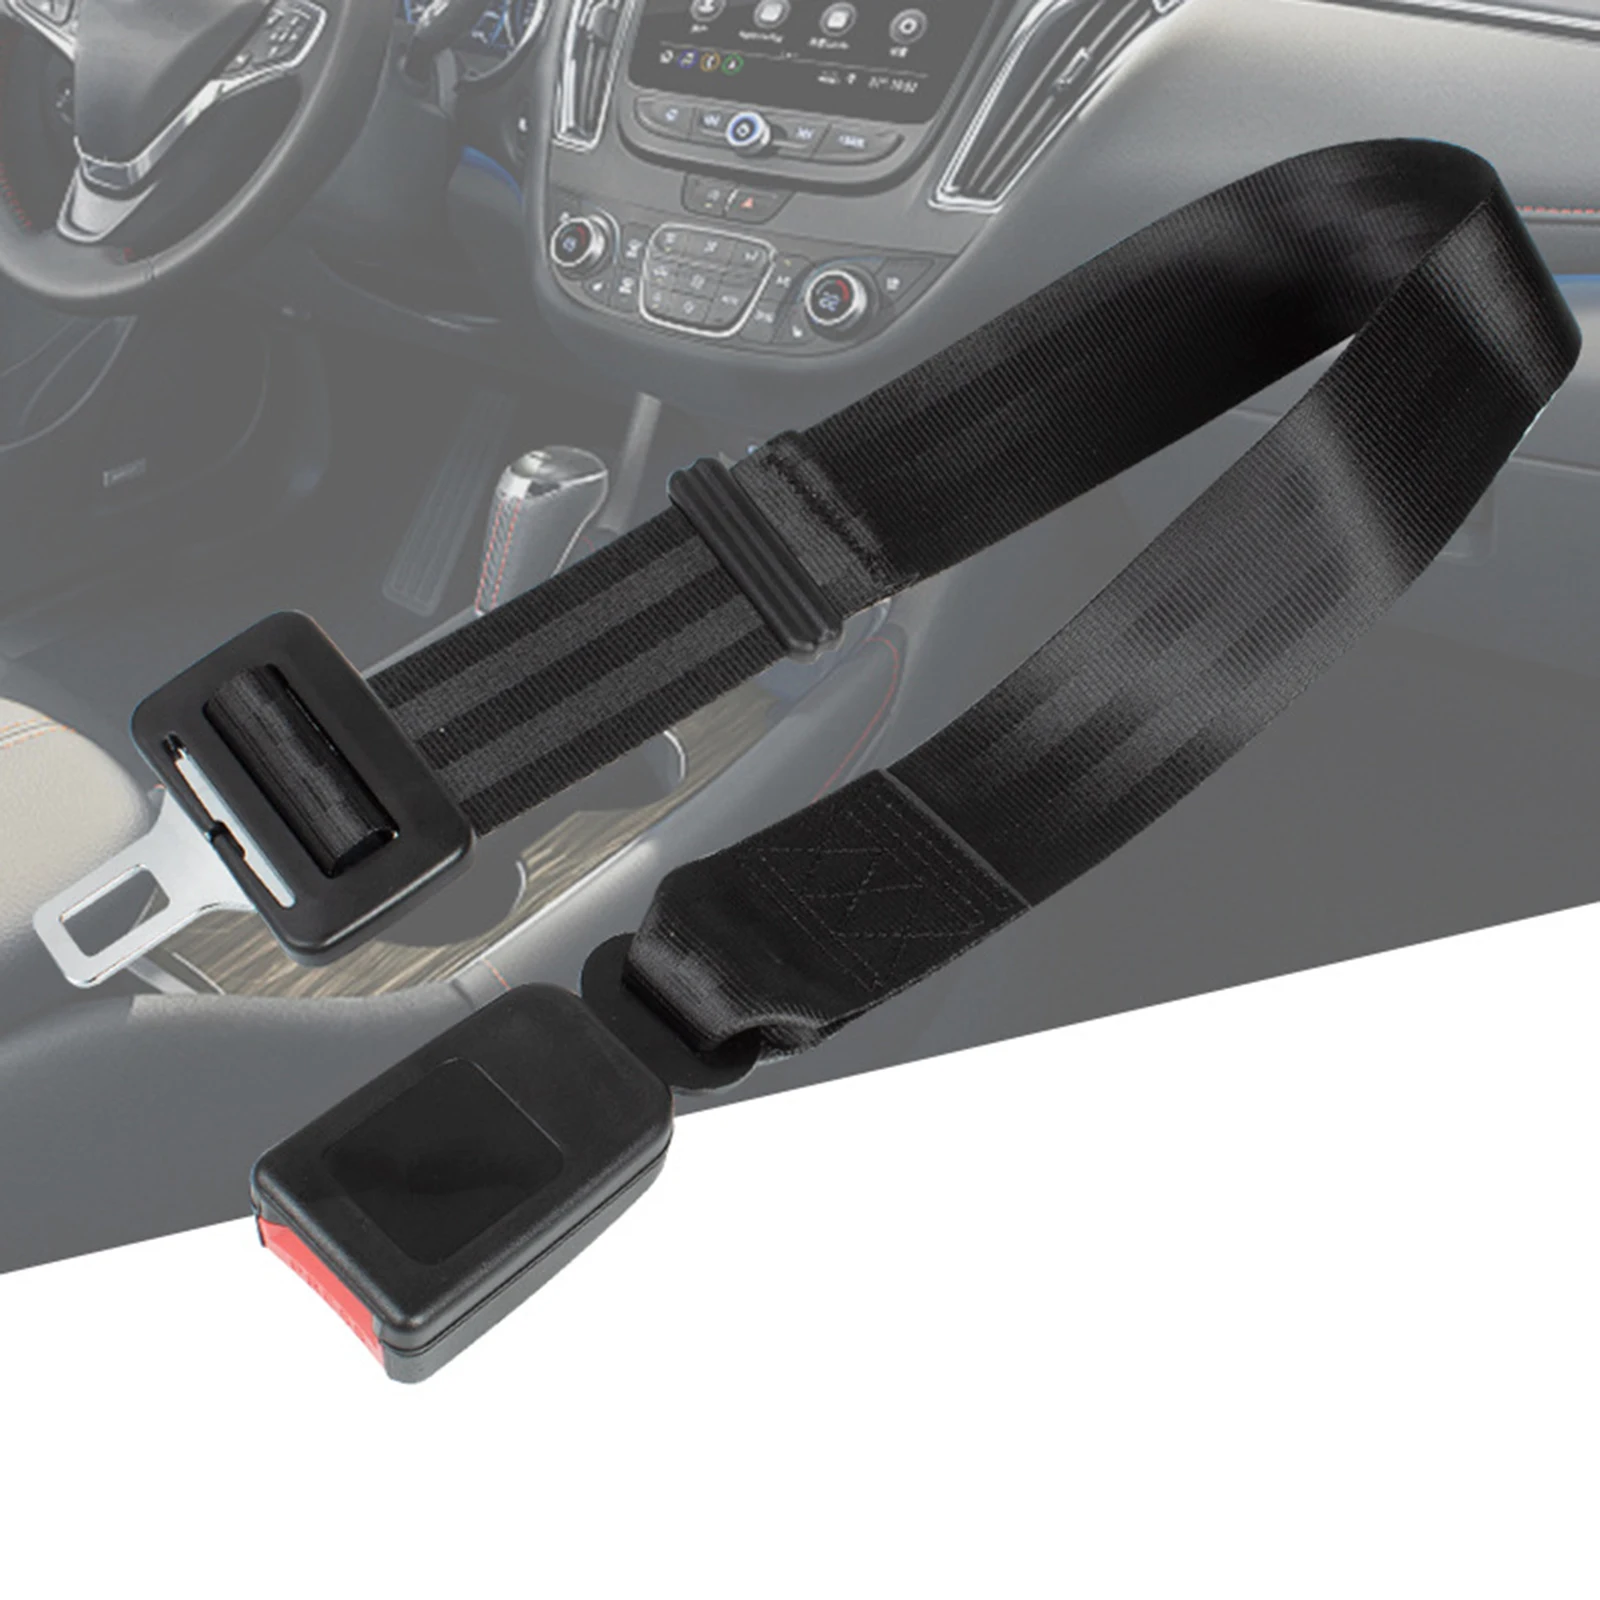 Adjustable Automotive Car Seat Belt Buckles Extender Extension 22-35 inch